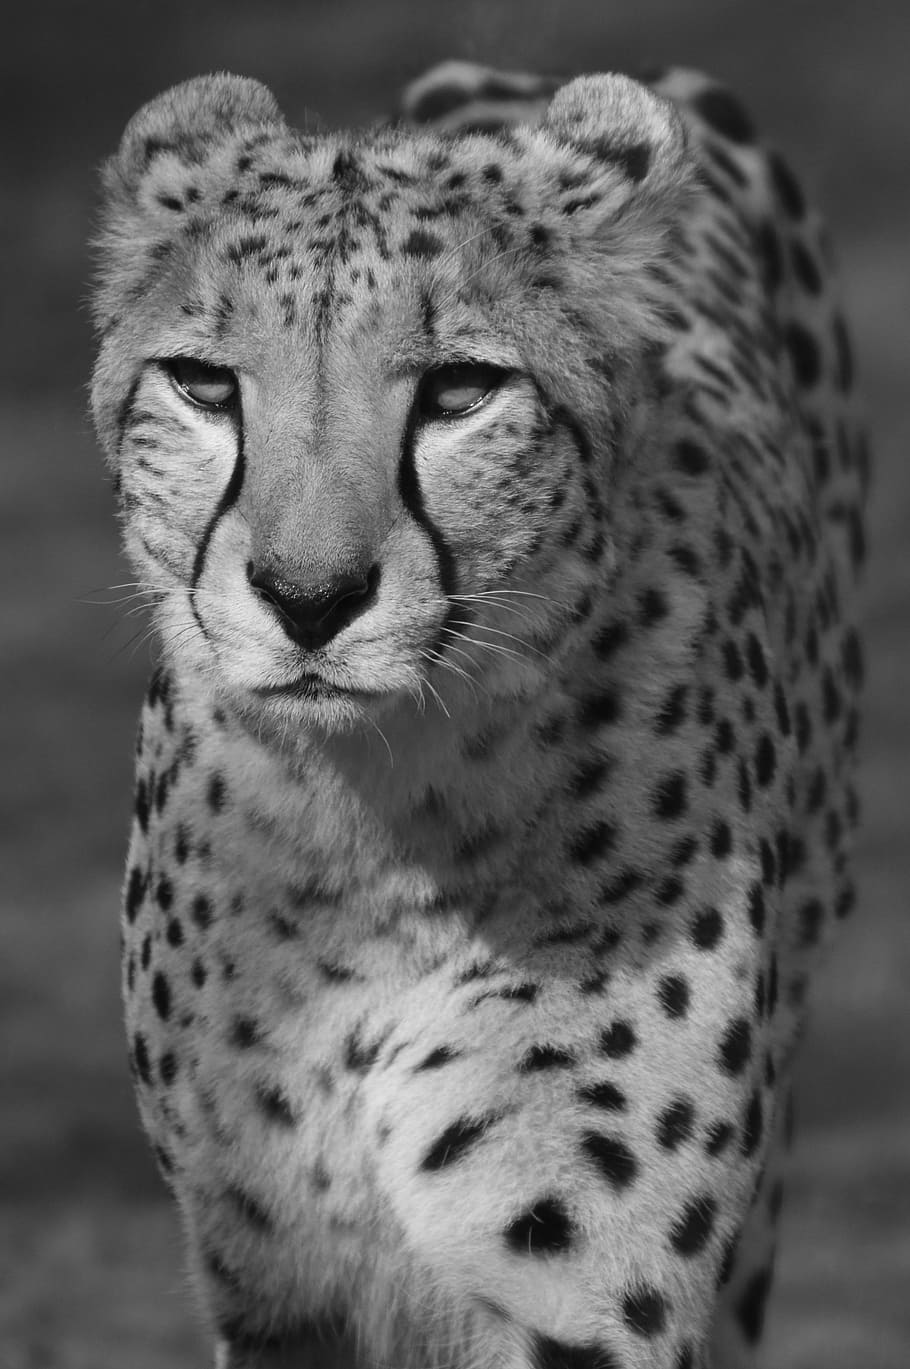 grayscale photography, cheetah, leopard, predator, animal, feline, animals in the wild, animal wildlife, one animal, animal themes